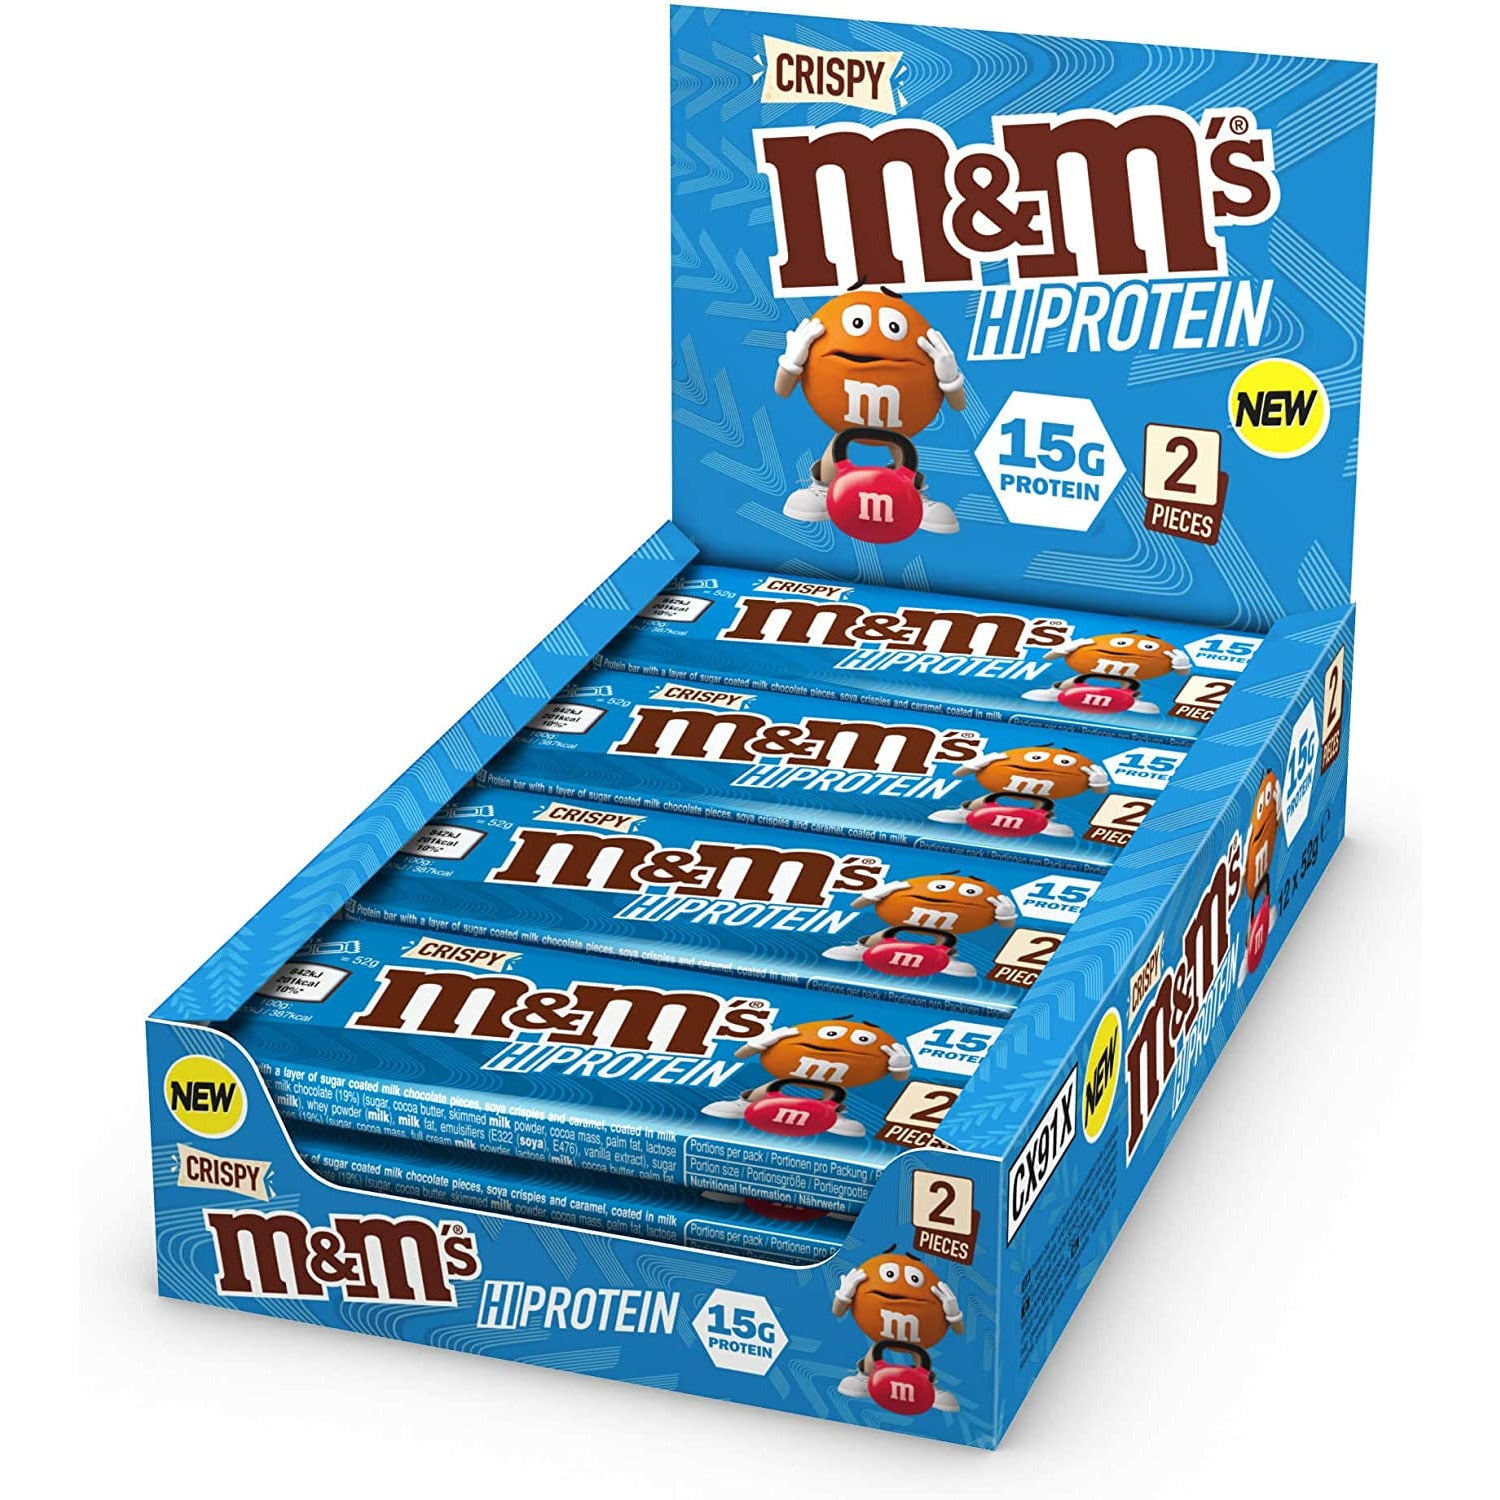 M&M's Hi-Protein Chocolate Bar (1 box of 18 bars) protein snacks NEW Crispy (with mini Crispy M&M's) BOX of 12 BEST BY MAR/2023 Mars mars-m-ms-hi-protein-chocolate-bar-1-box-of-18-bars